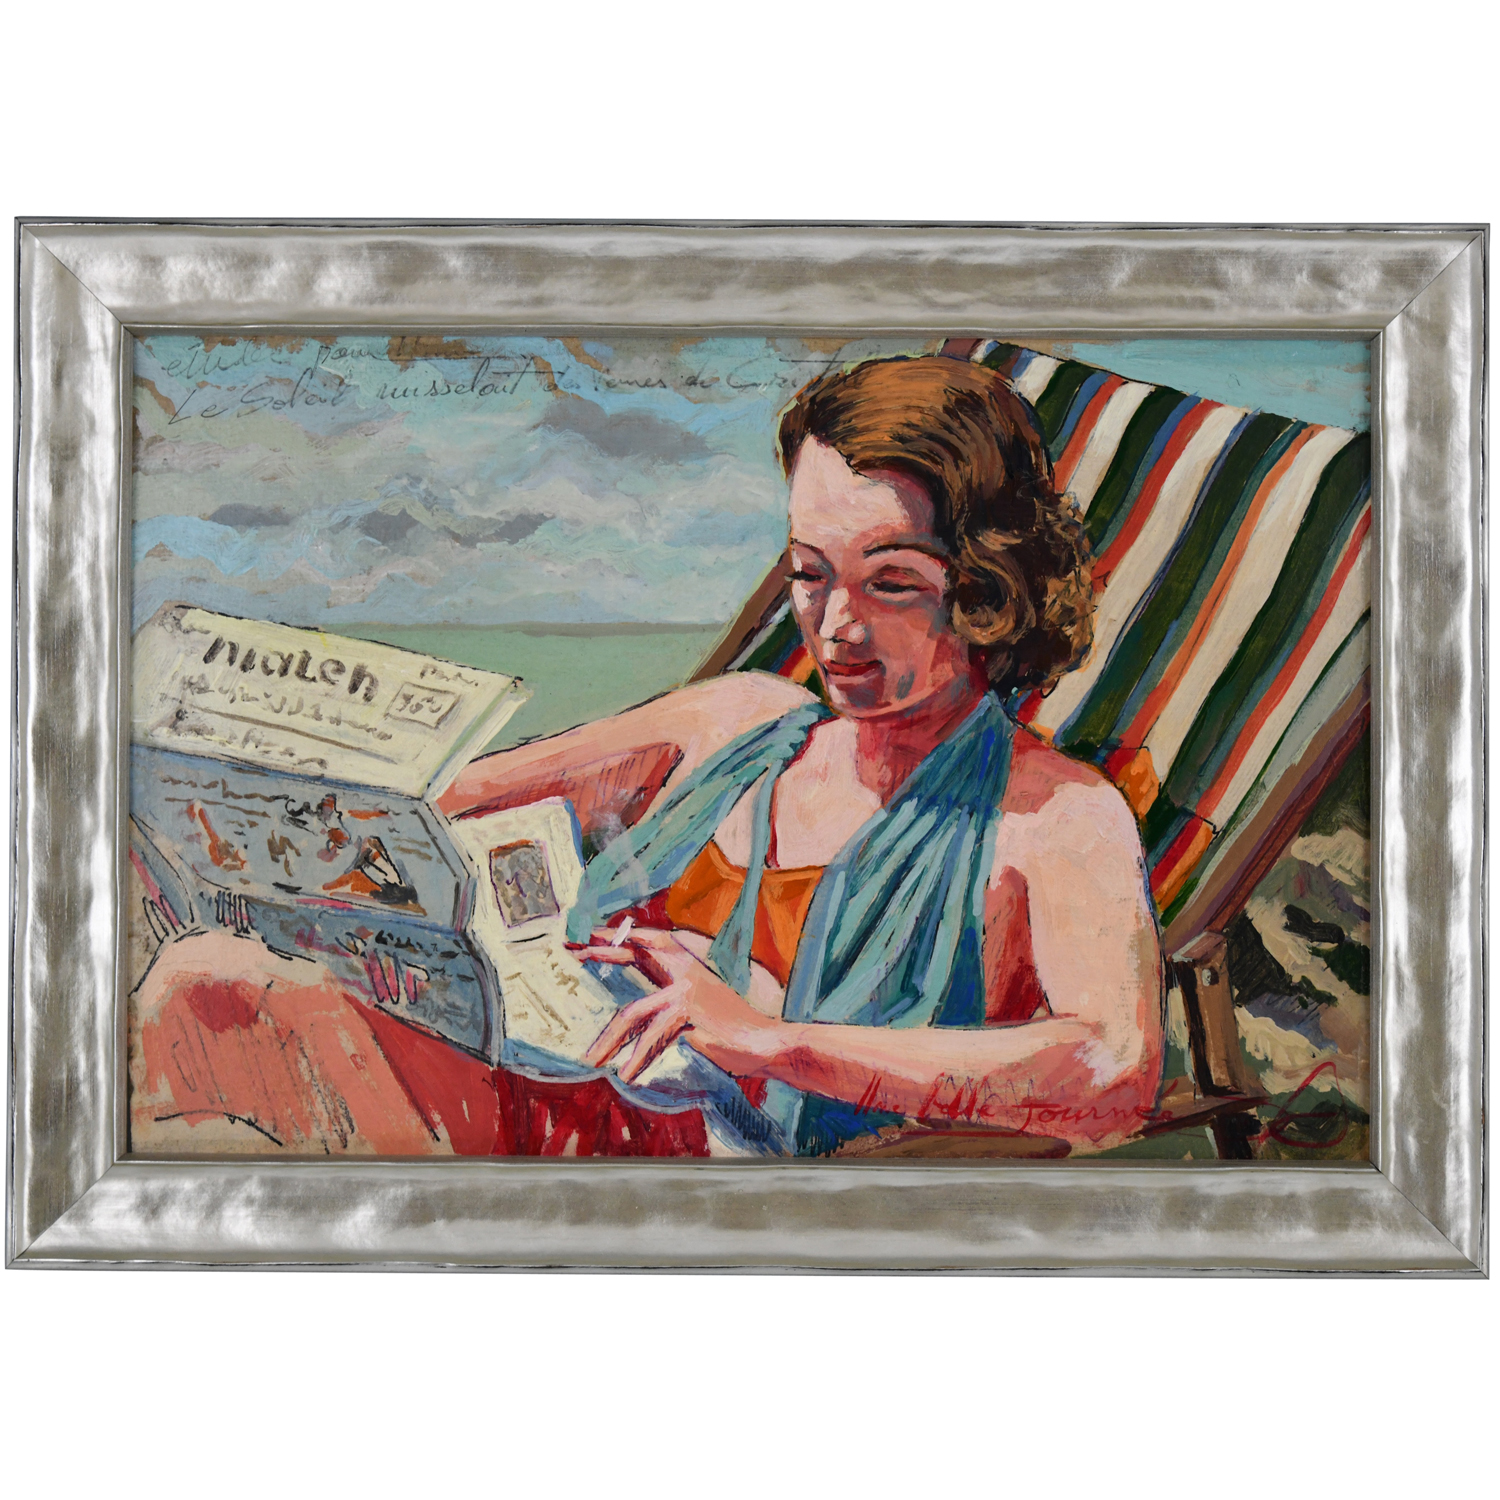 Caillotin art deco painting woman on the beach - 1